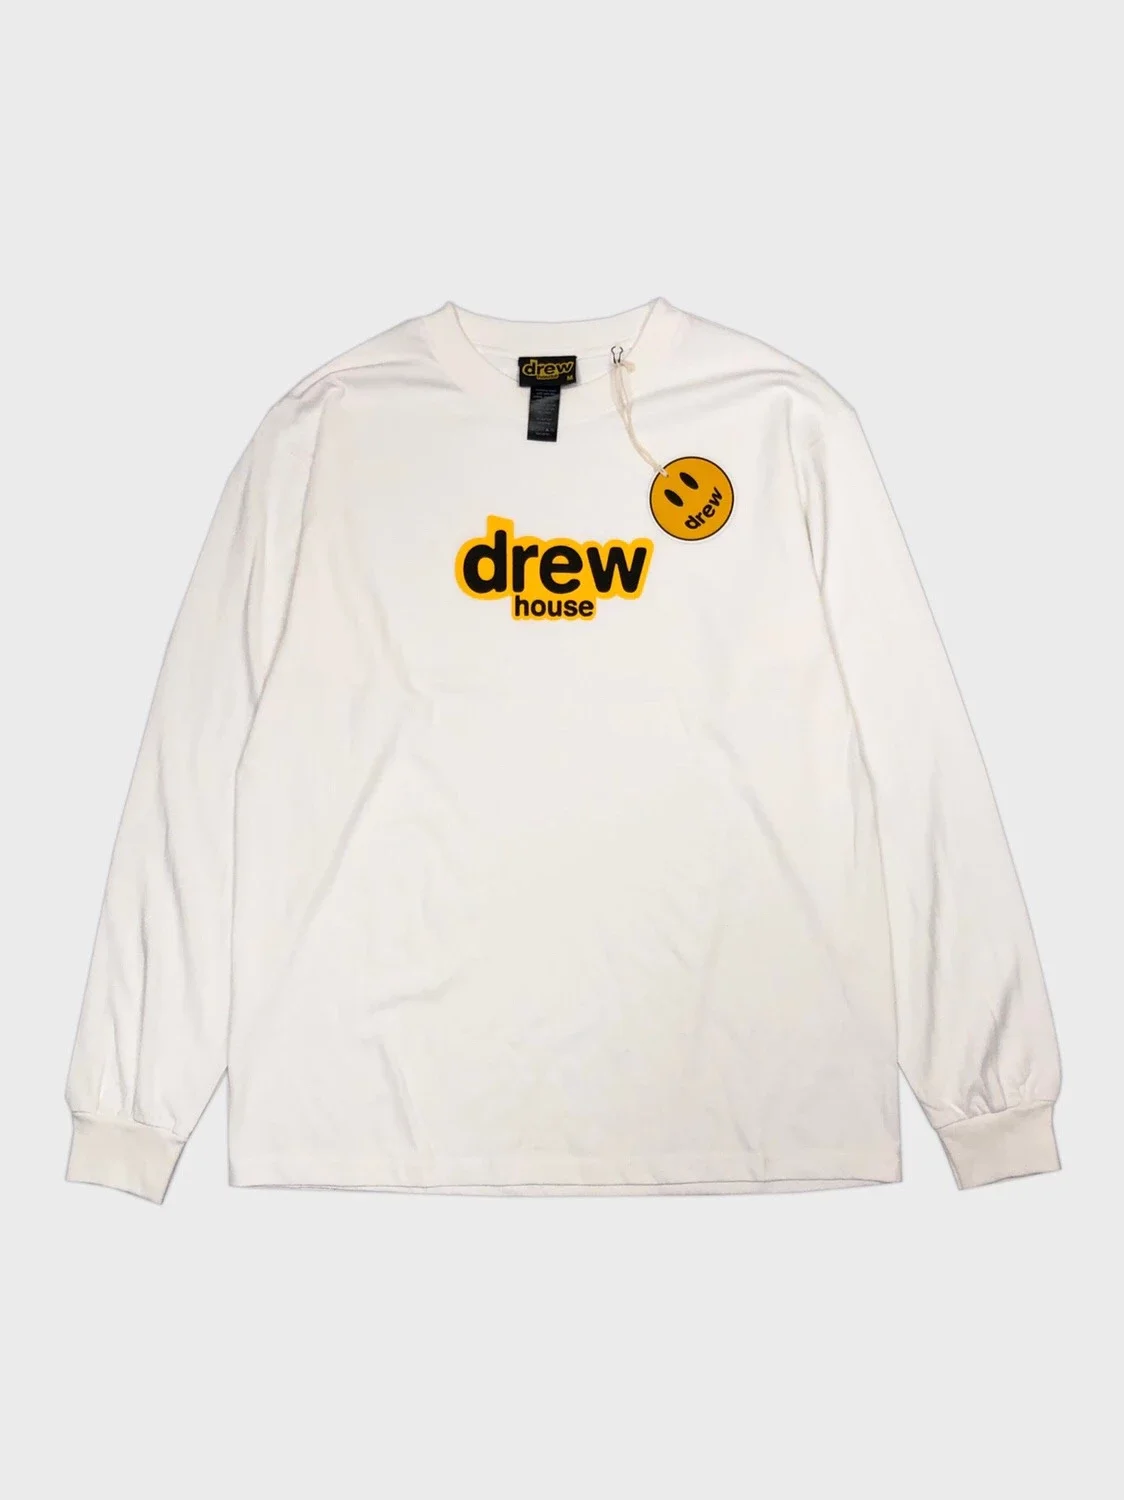 DREW drew house basic logo shirt DREW 基础字母长袖T恤